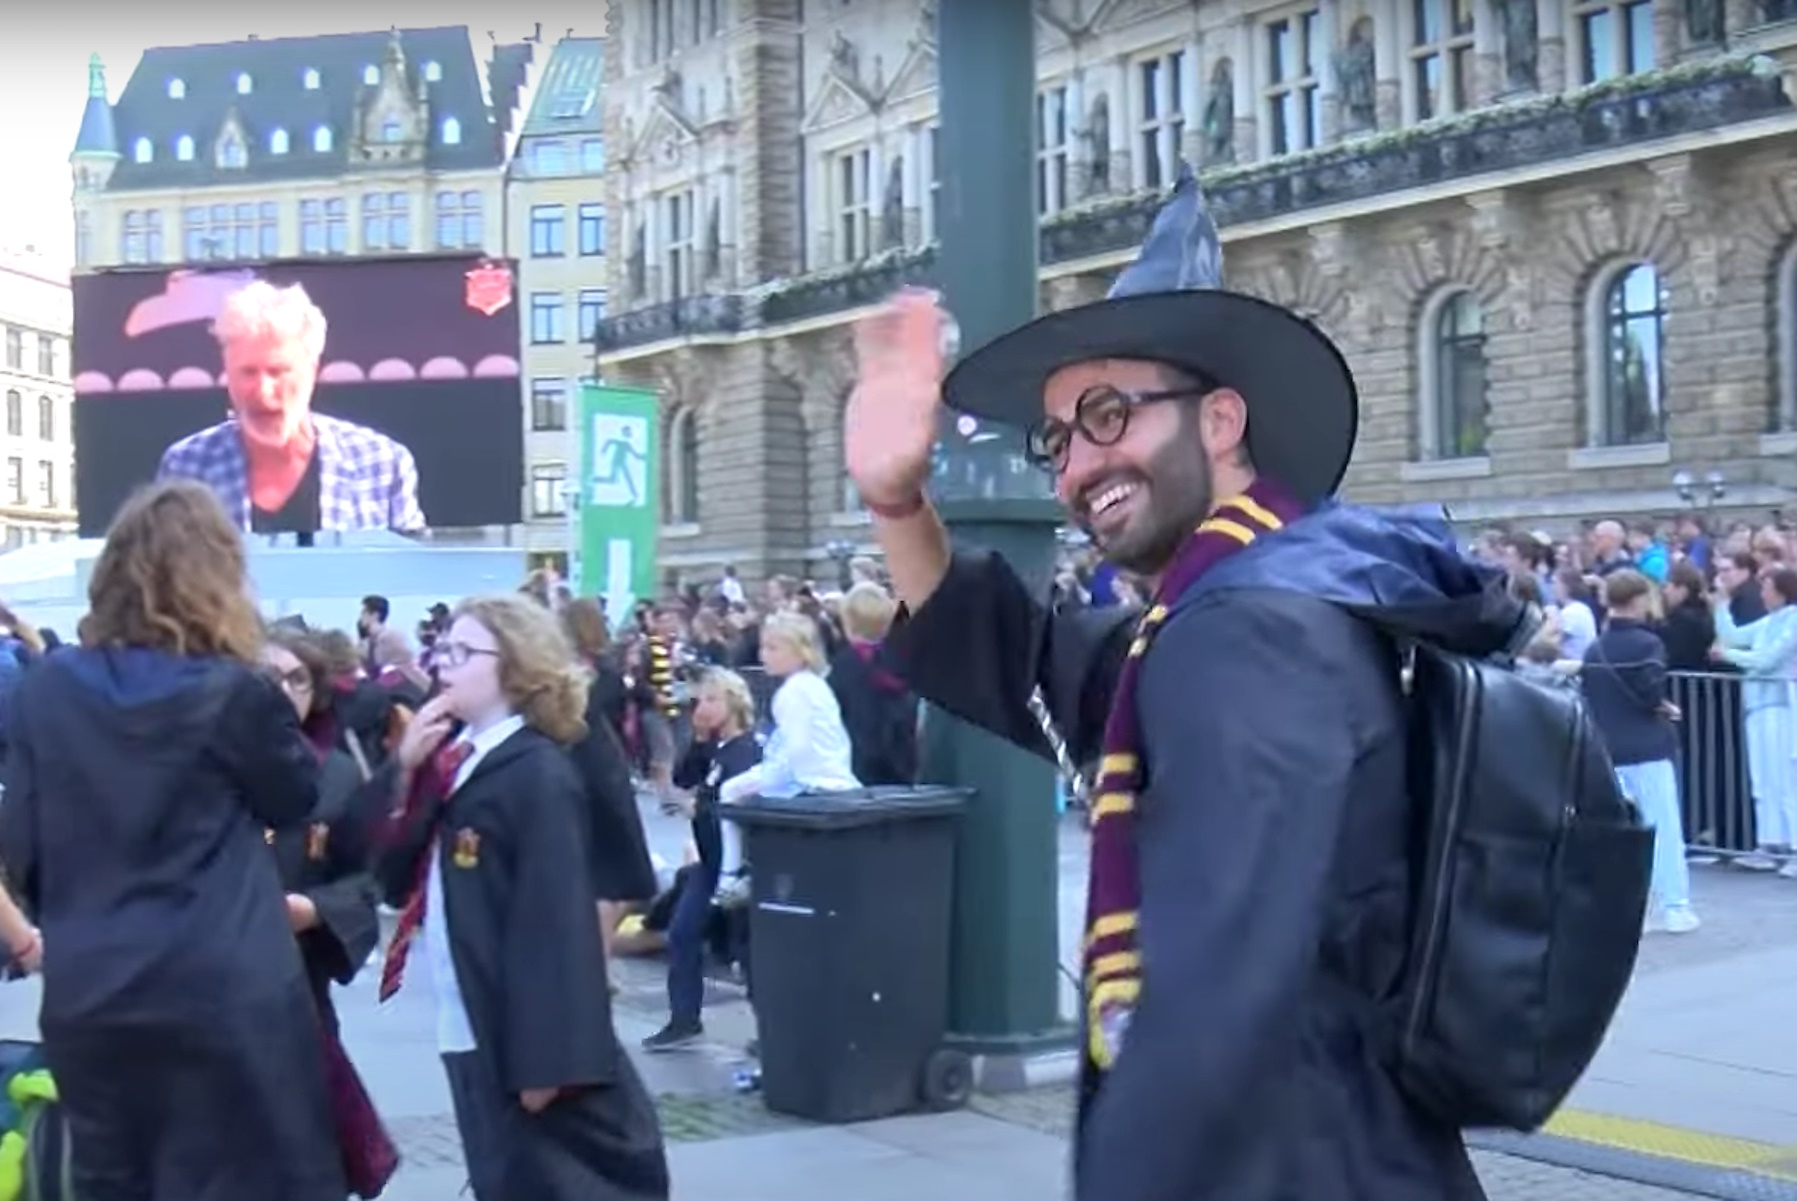 Harry Potter – Αμβούργο: Παγκόσμιο ρεκόρ μεγαλύτερης συγκέντρωσης μεταμφιεσμένων στον διάσημο μάγο